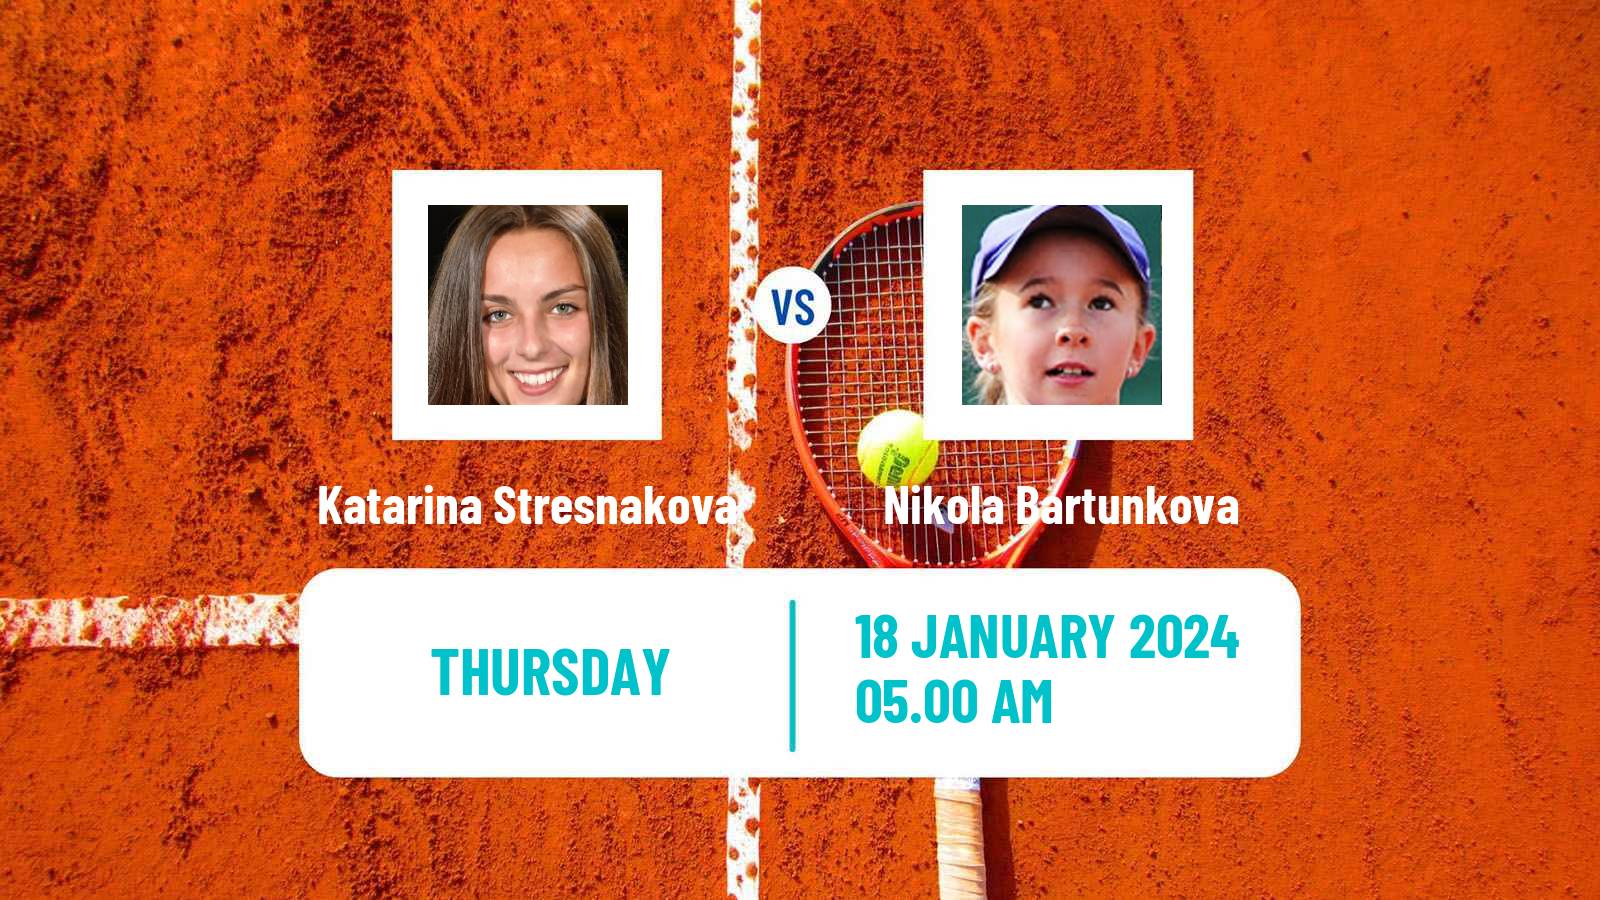 Tennis ITF W35 Sunderland Women Katarina Stresnakova - Nikola Bartunkova